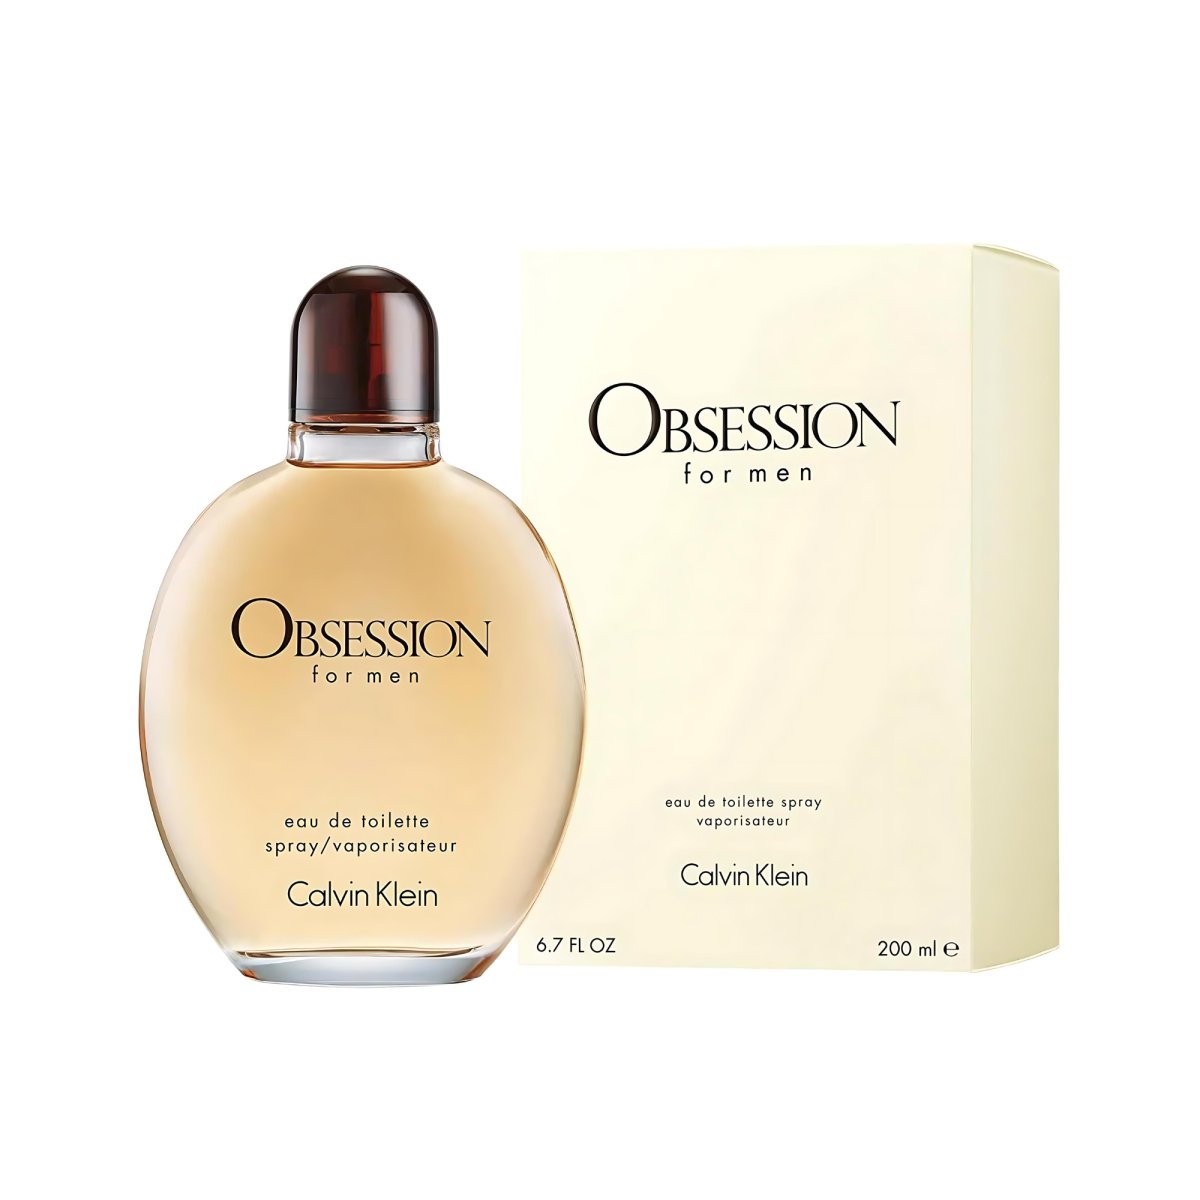 OBSESSION Eau de Toilette Spray for Men - 6.7 oz / 200 ML - For Men - Perfume Headquarters - Calvin Klein - 6.7 oz - Eau de Toilette - Fragrance - 88300106752 - Fragrance